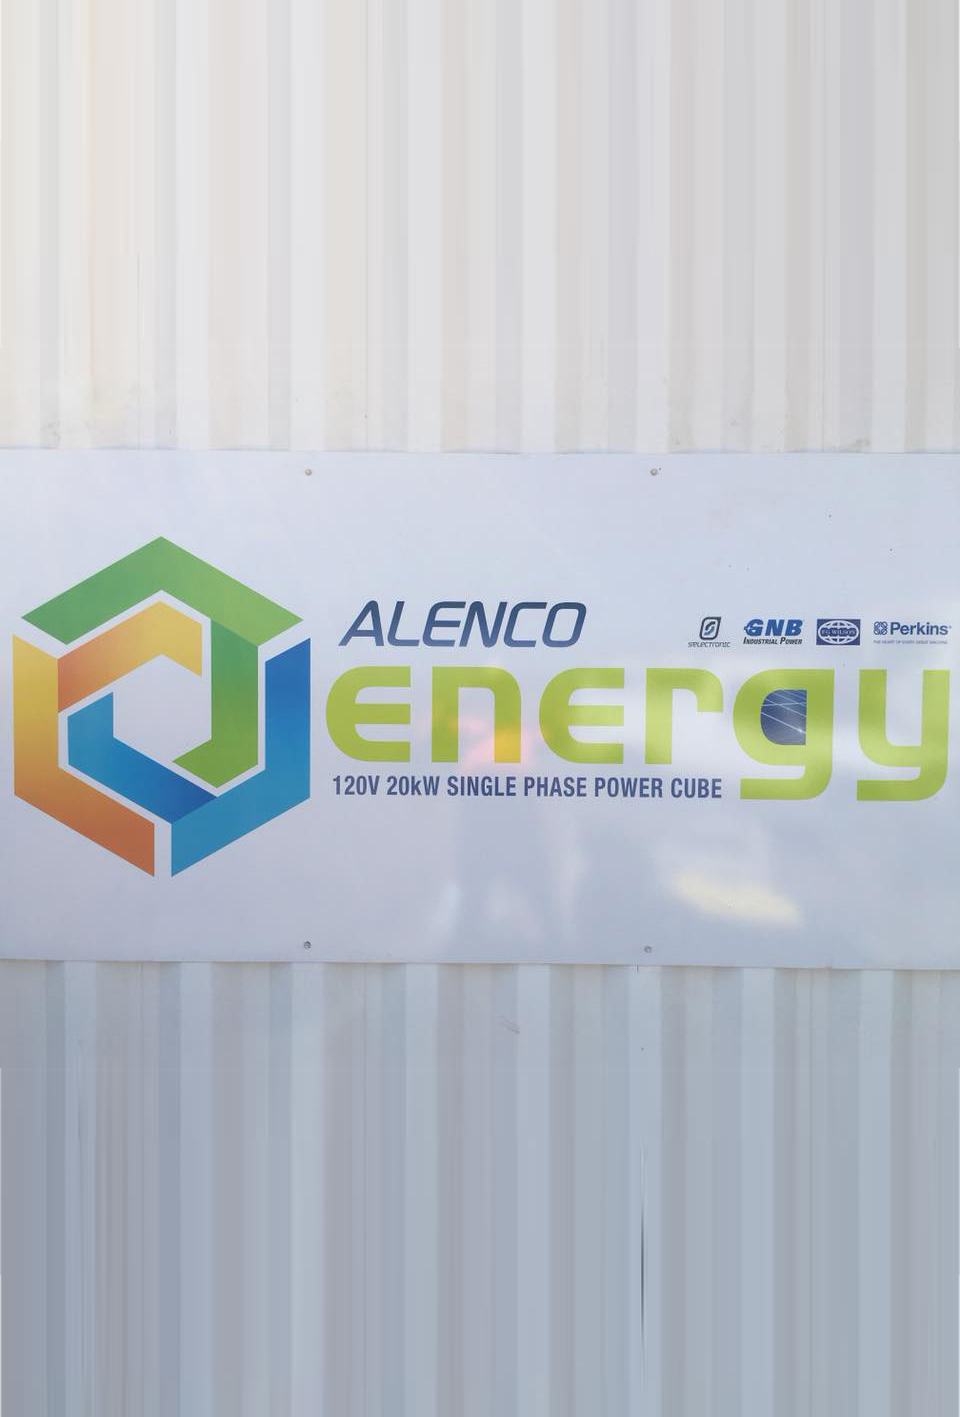 Alenco sign on building | Darwin